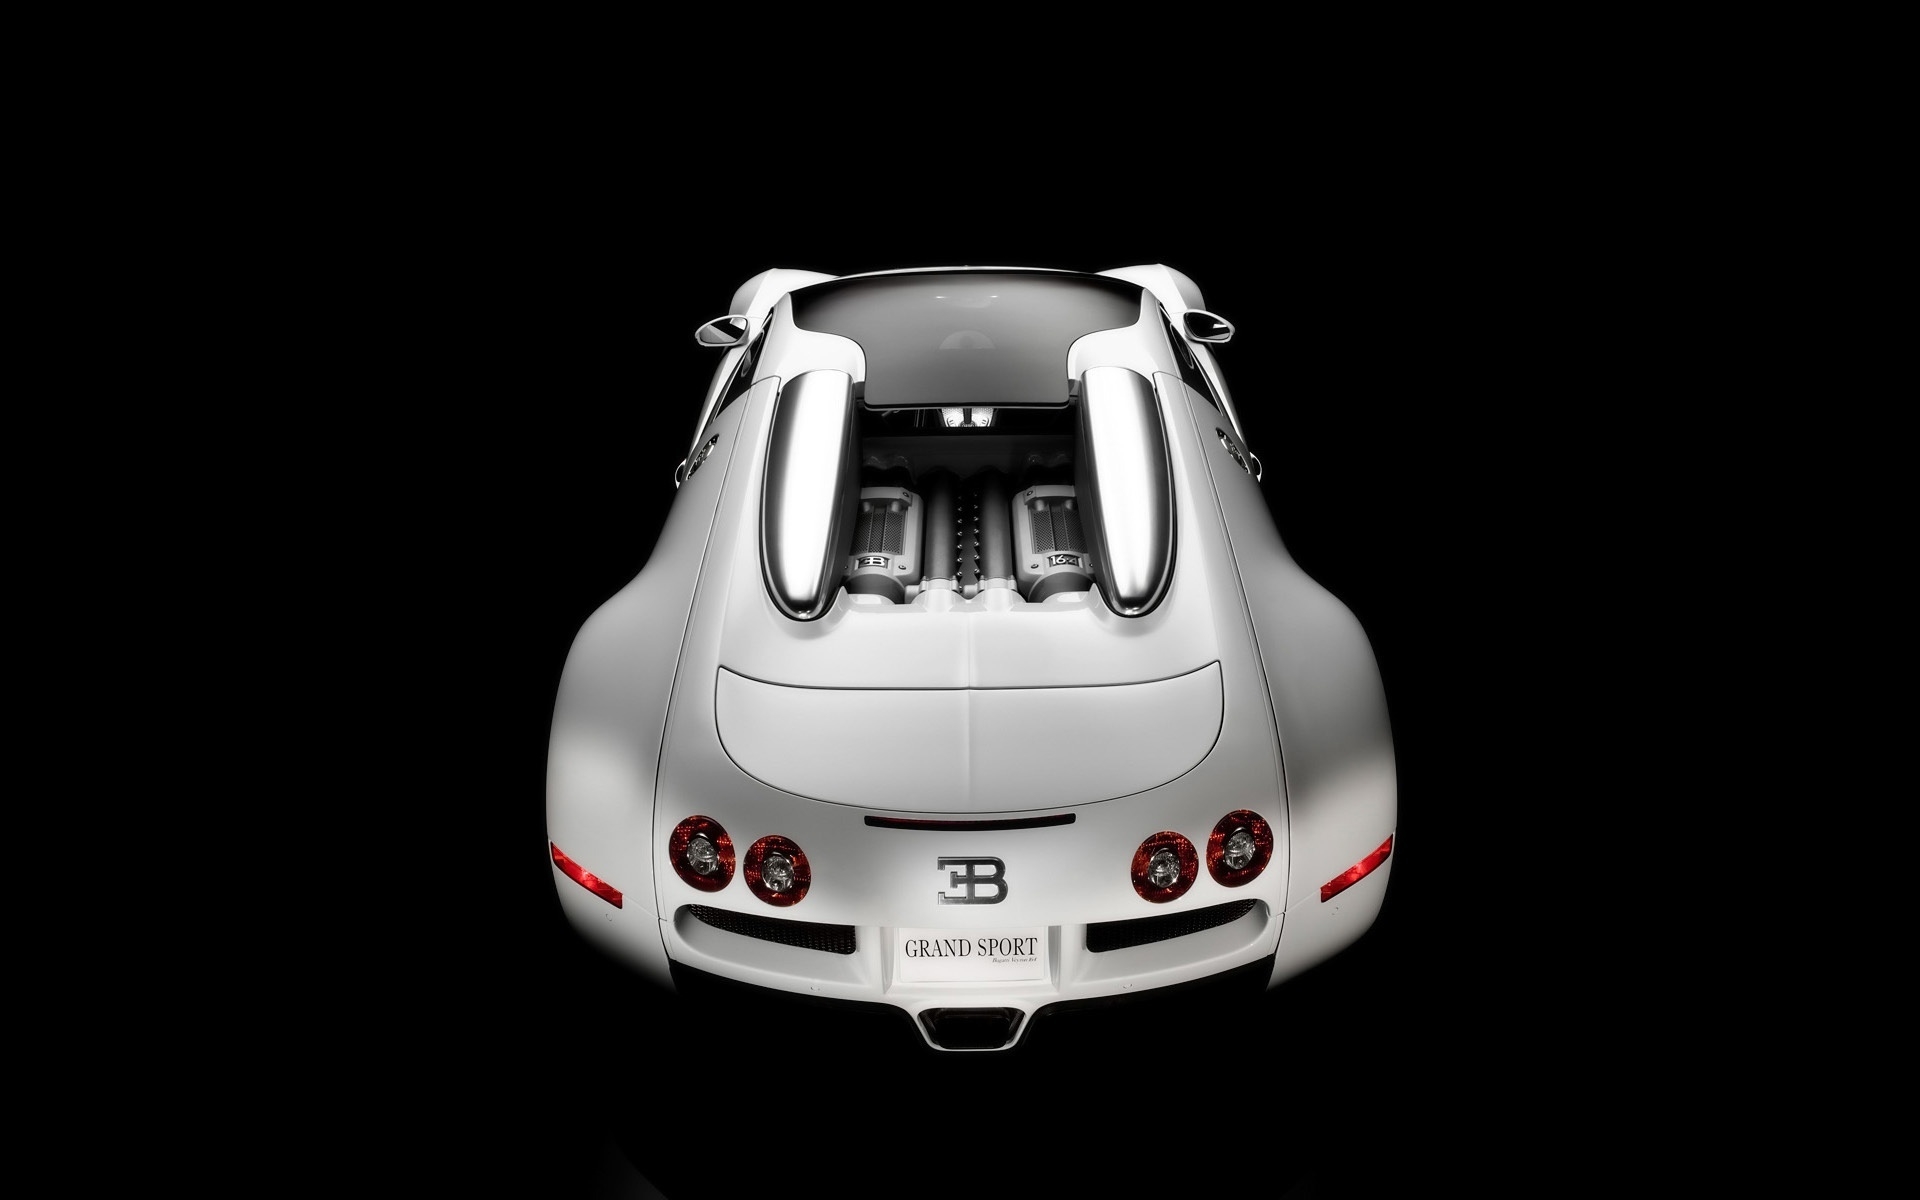 Bugatti Veyron 16.4 Grand Sport Production Version 2009 - Studio Rear Top for 1920 x 1200 widescreen resolution